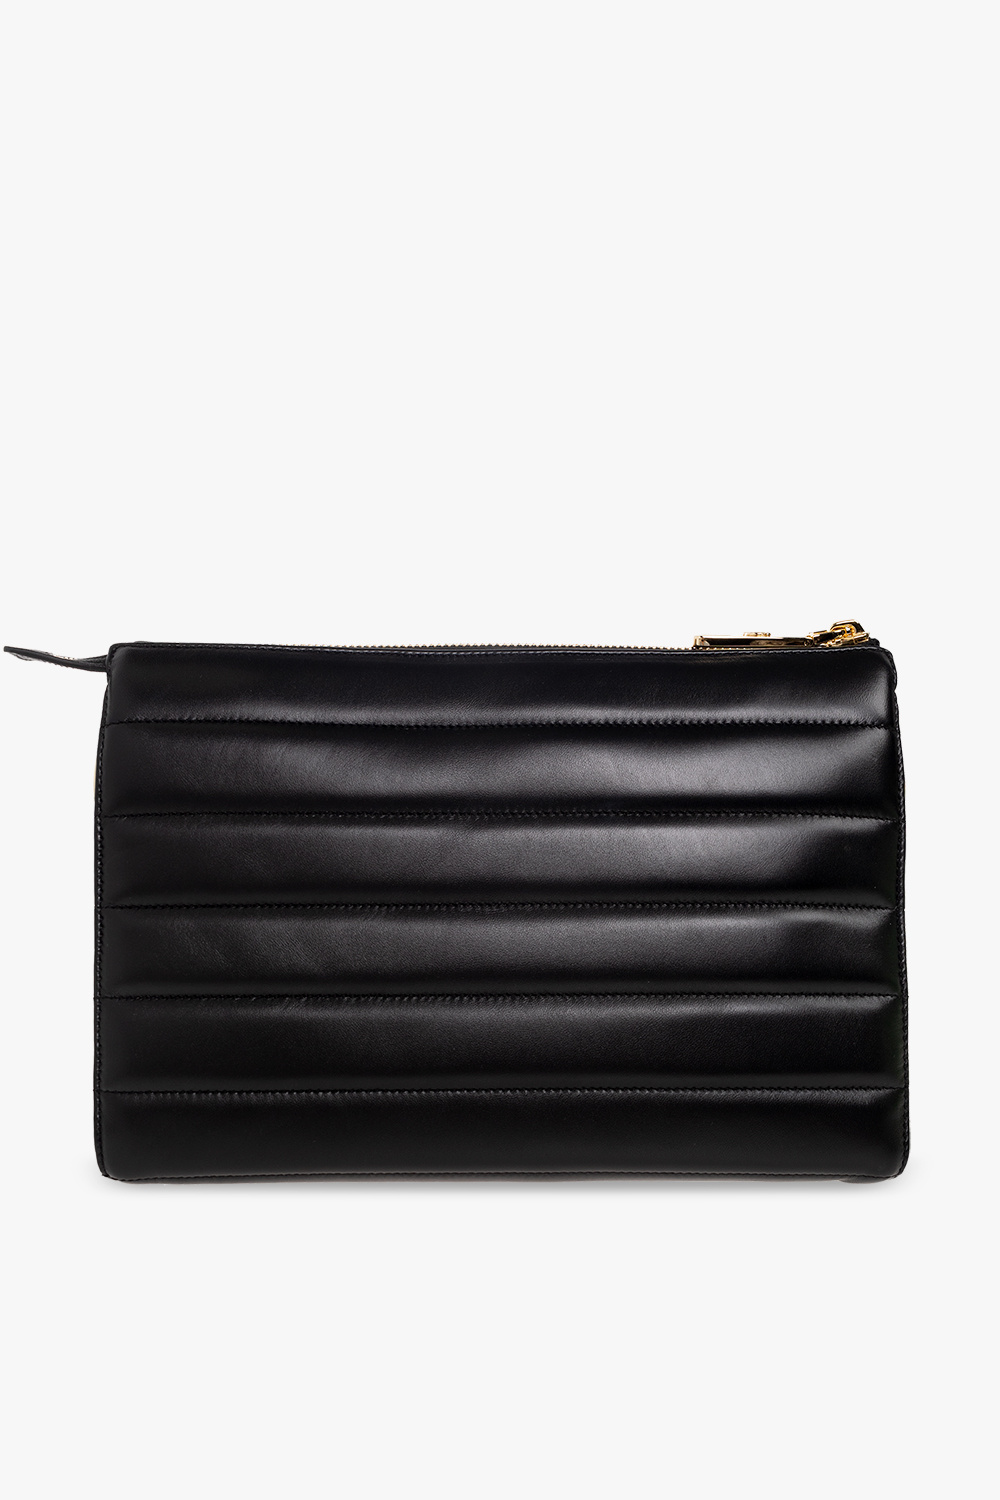 dolce sicilia & Gabbana ‘Tris Medium’ shoulder bag